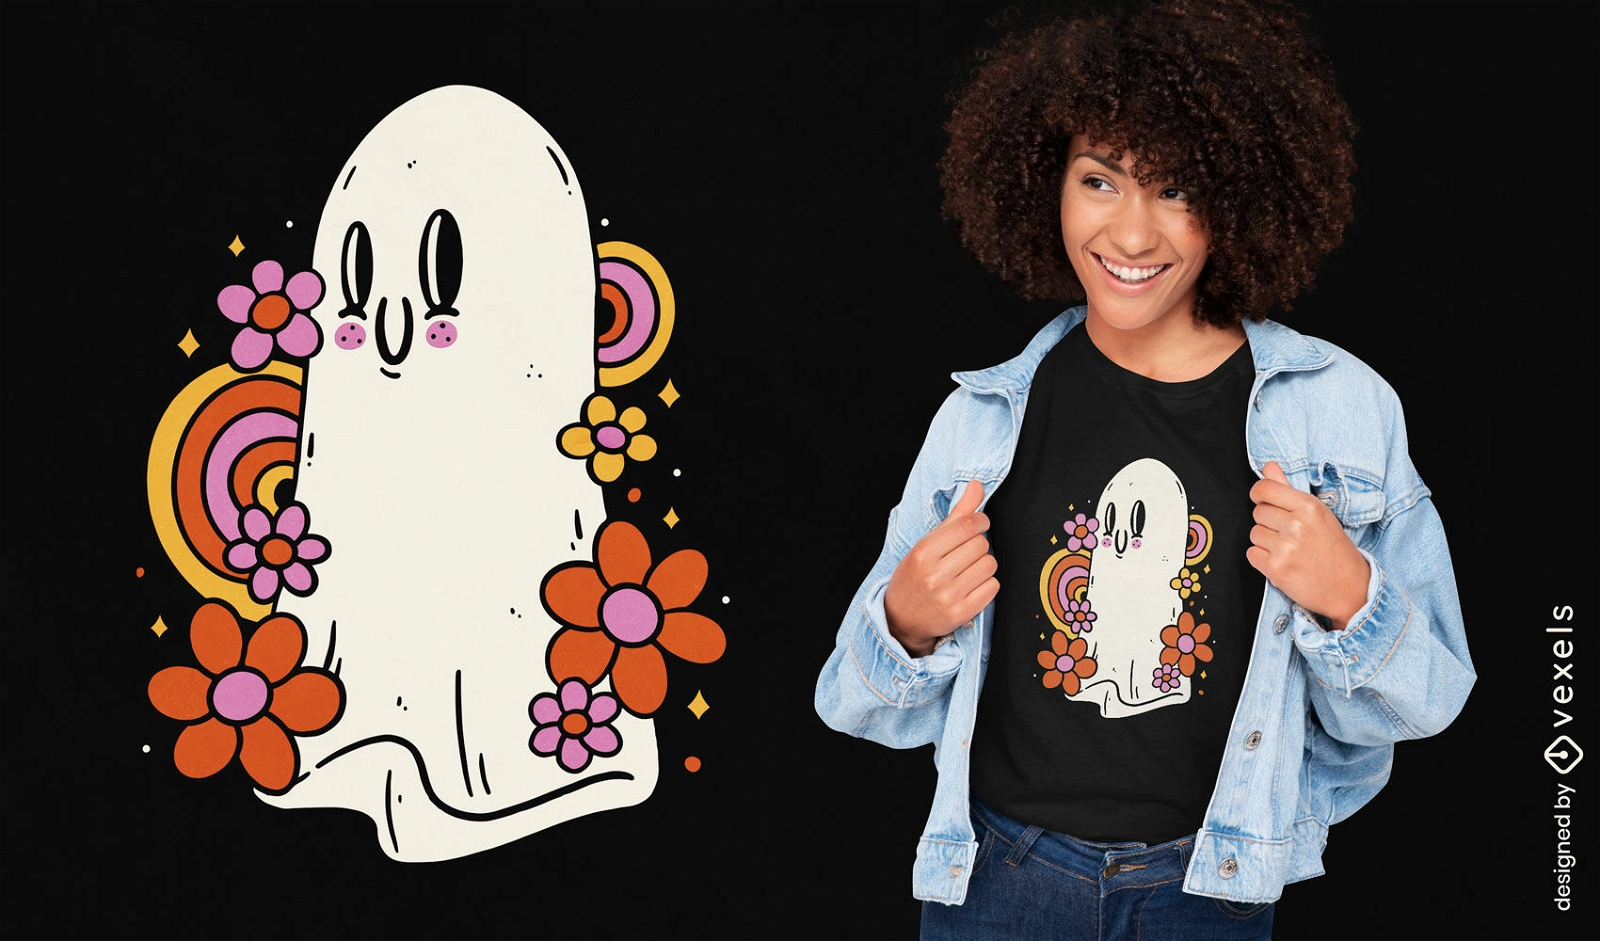 Diseño de camiseta de dibujos animados fantasma hippie